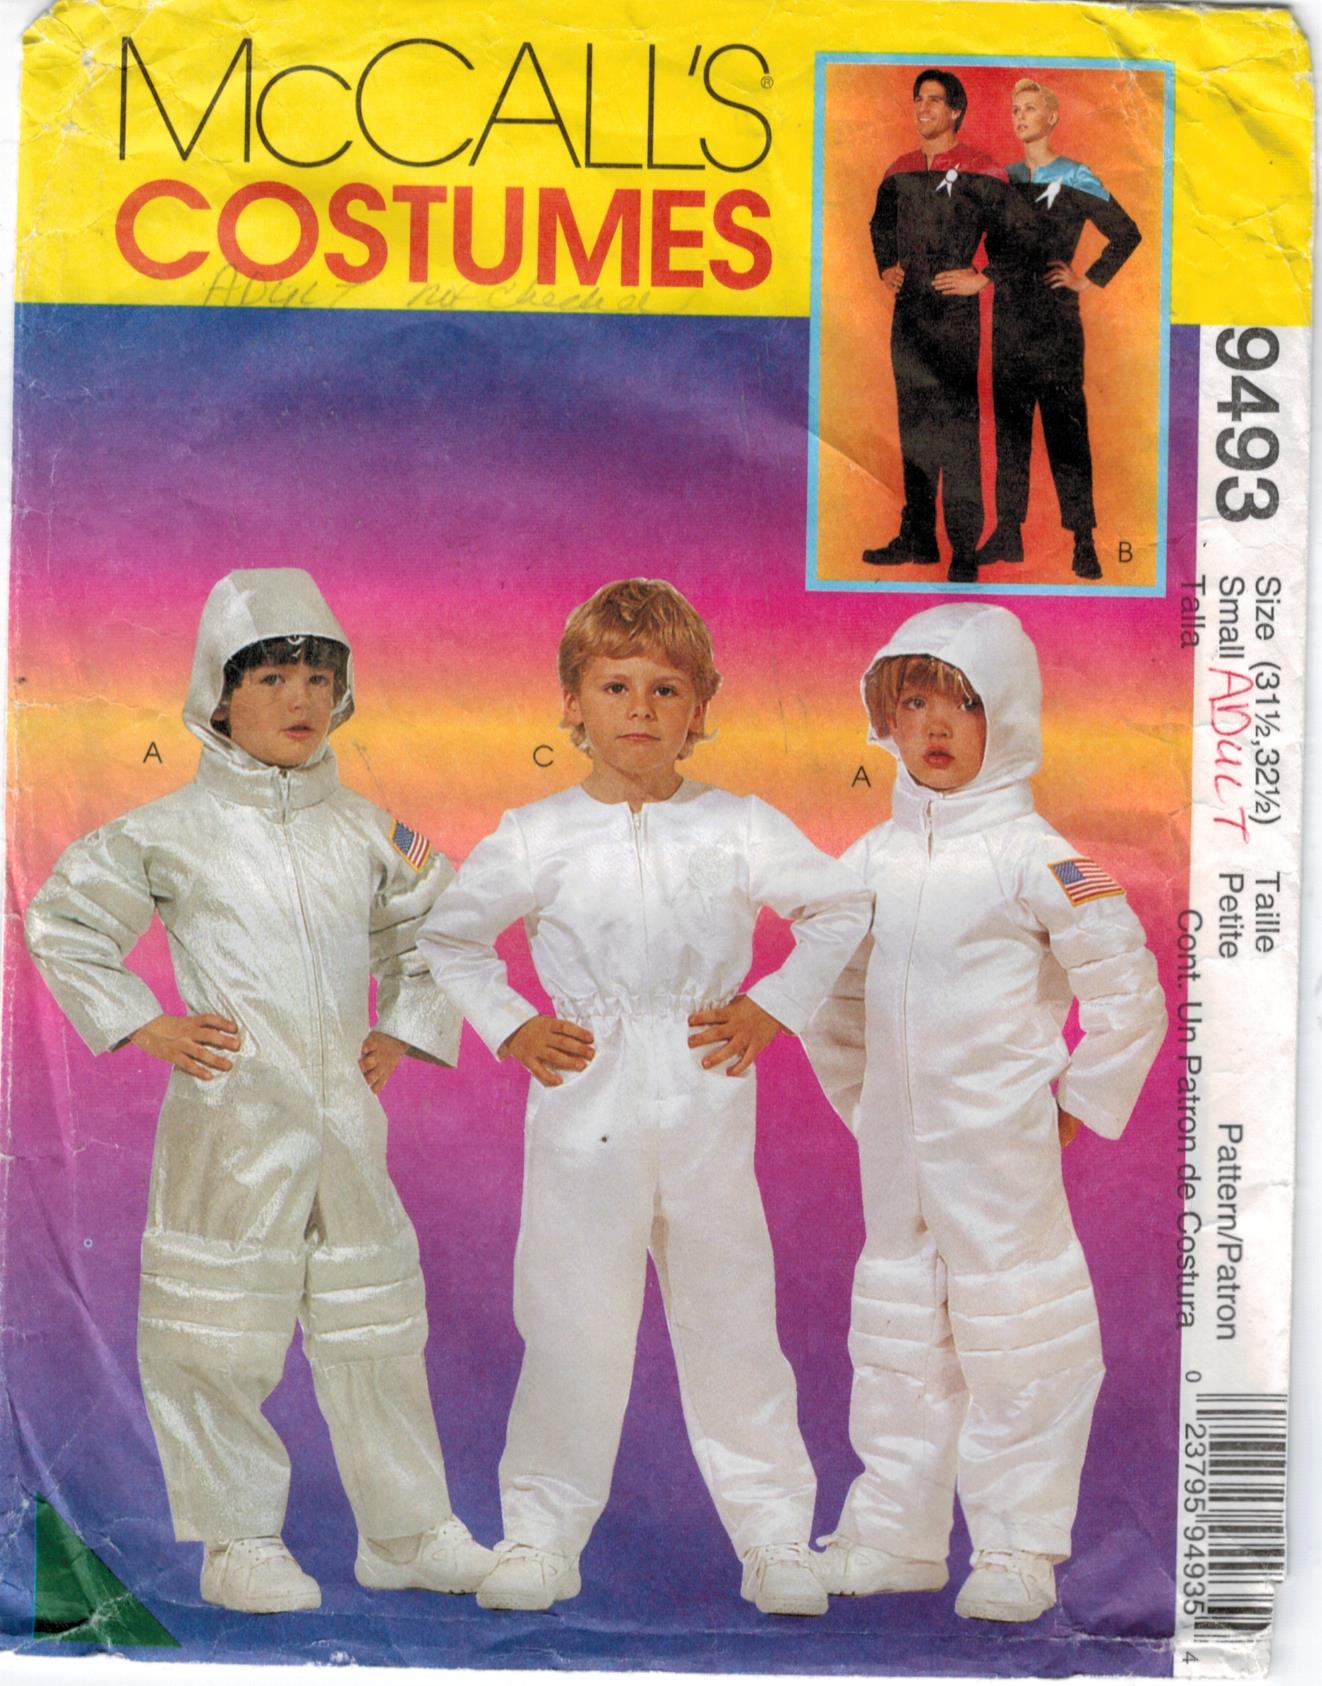 Mccalls Pattern 9493 Astronaut Star Trek Costume Adult Size Small